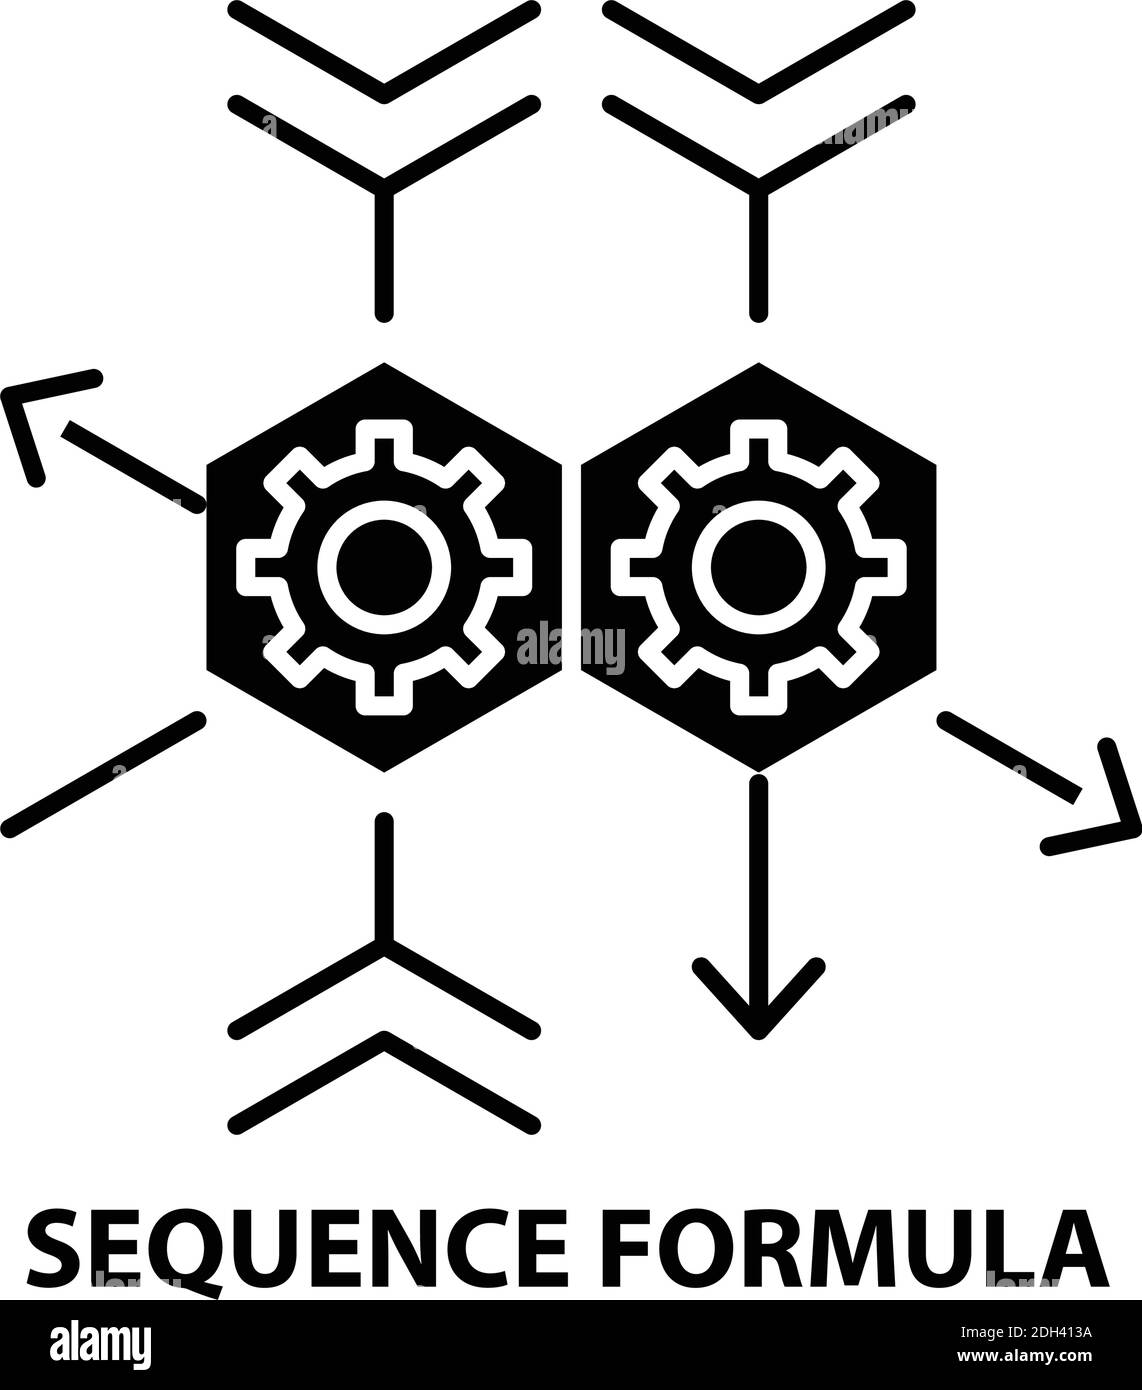 sequence formula icon, black vector sign with editable strokes, concept illustration Stock Vector